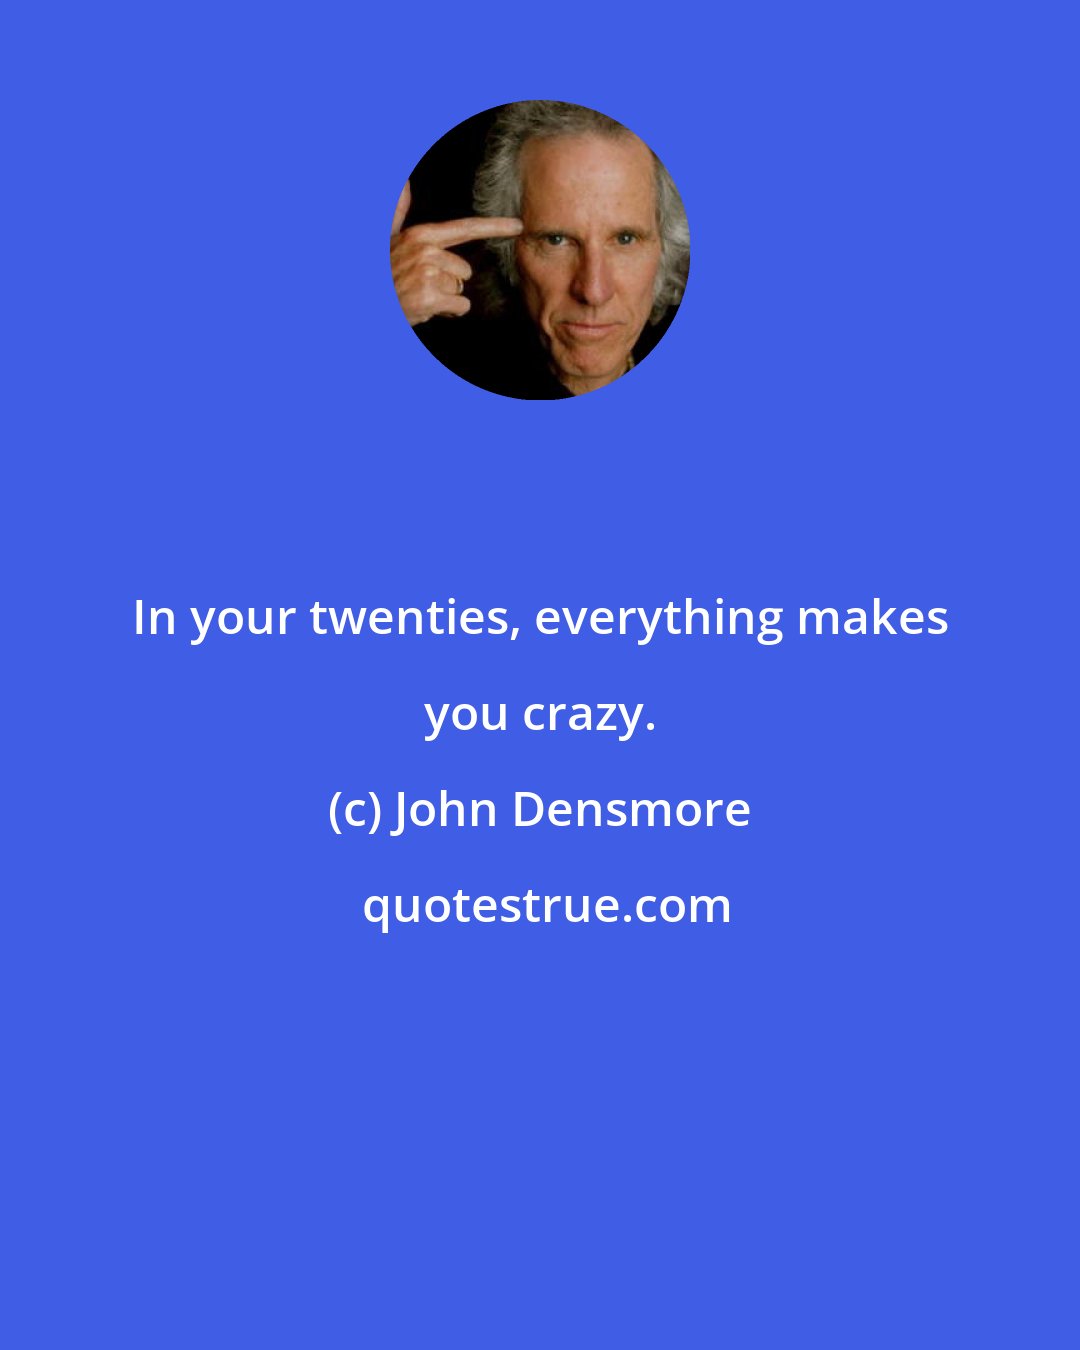 John Densmore: In your twenties, everything makes you crazy.